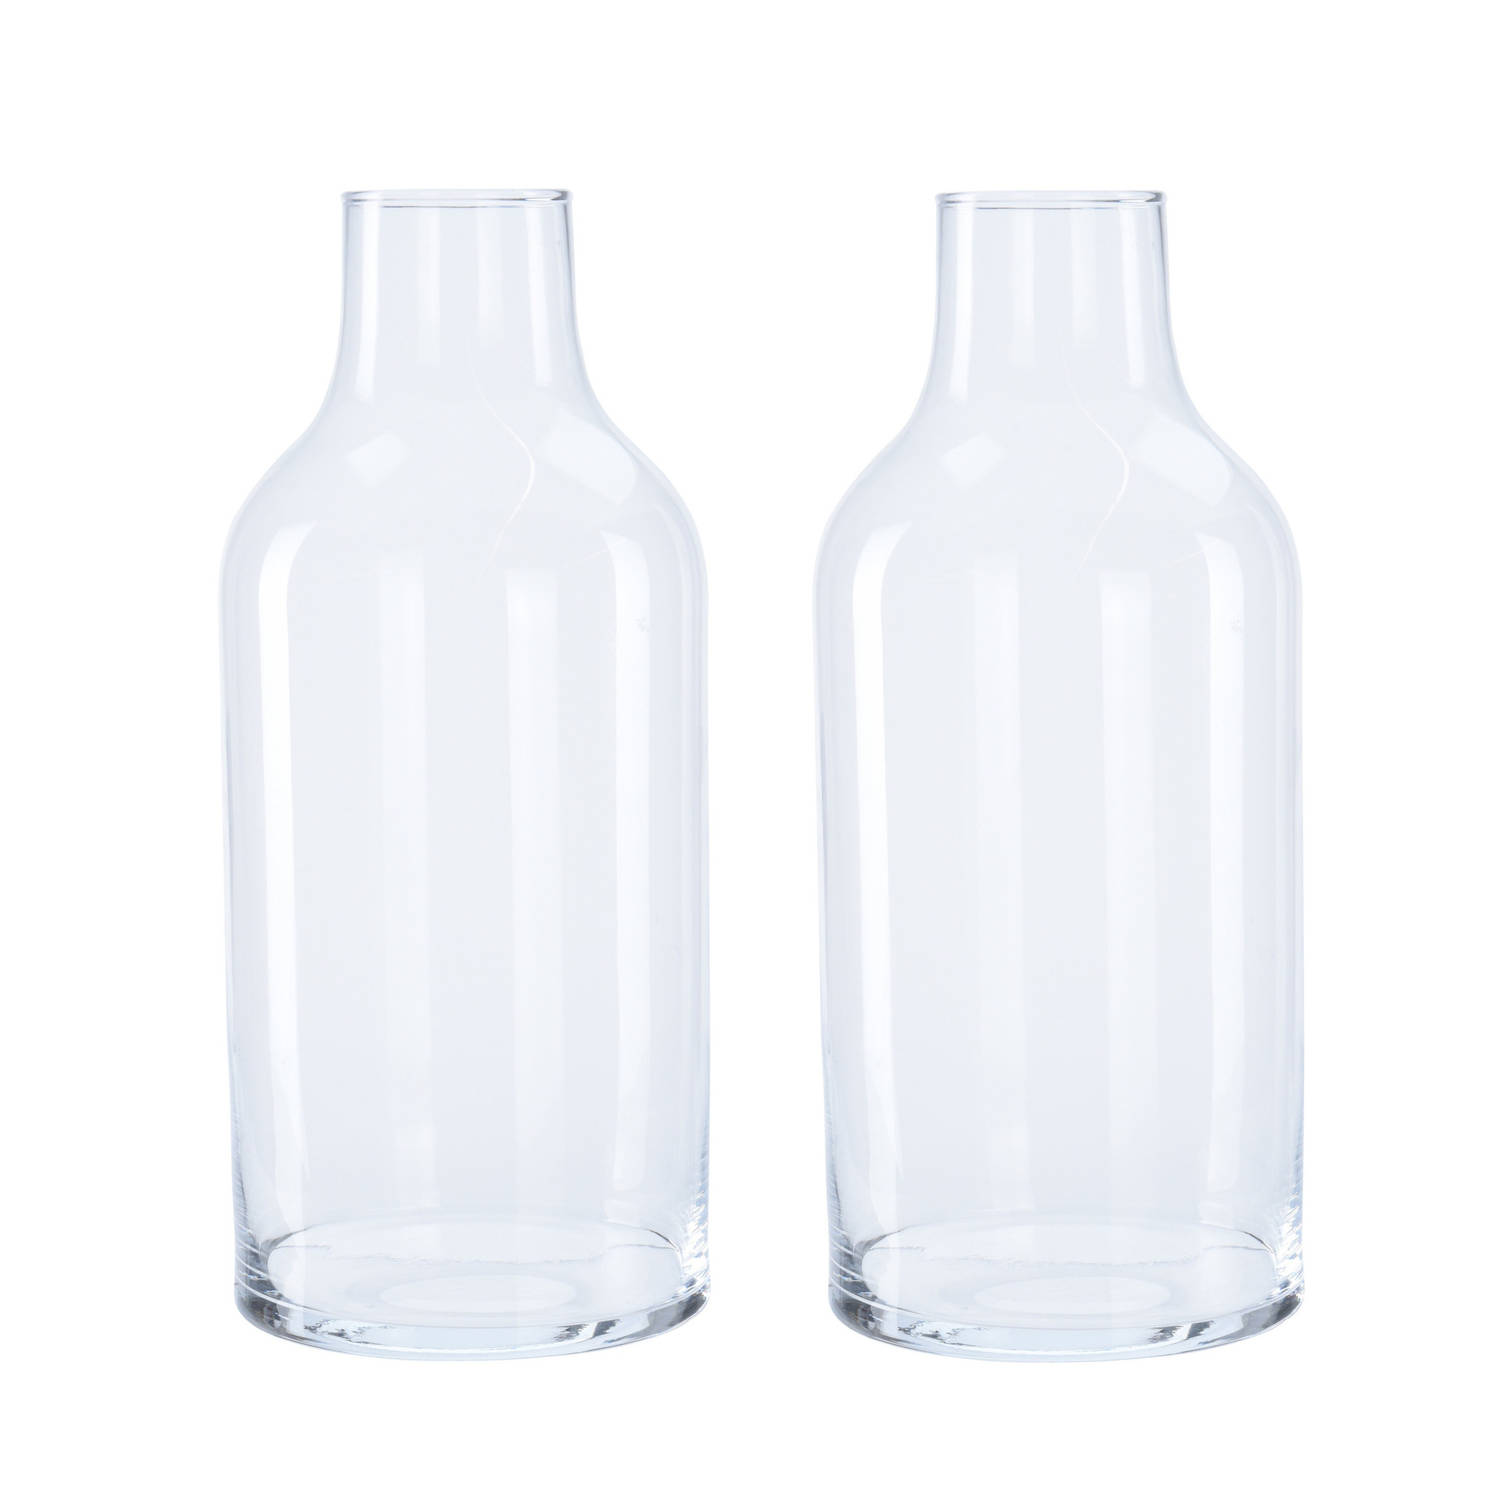 Bellatio Design 2x Flesvormige Bloemenvazen/decoratie Vazen/boeketvazen Transparant Glas 3300 Ml - Vazen